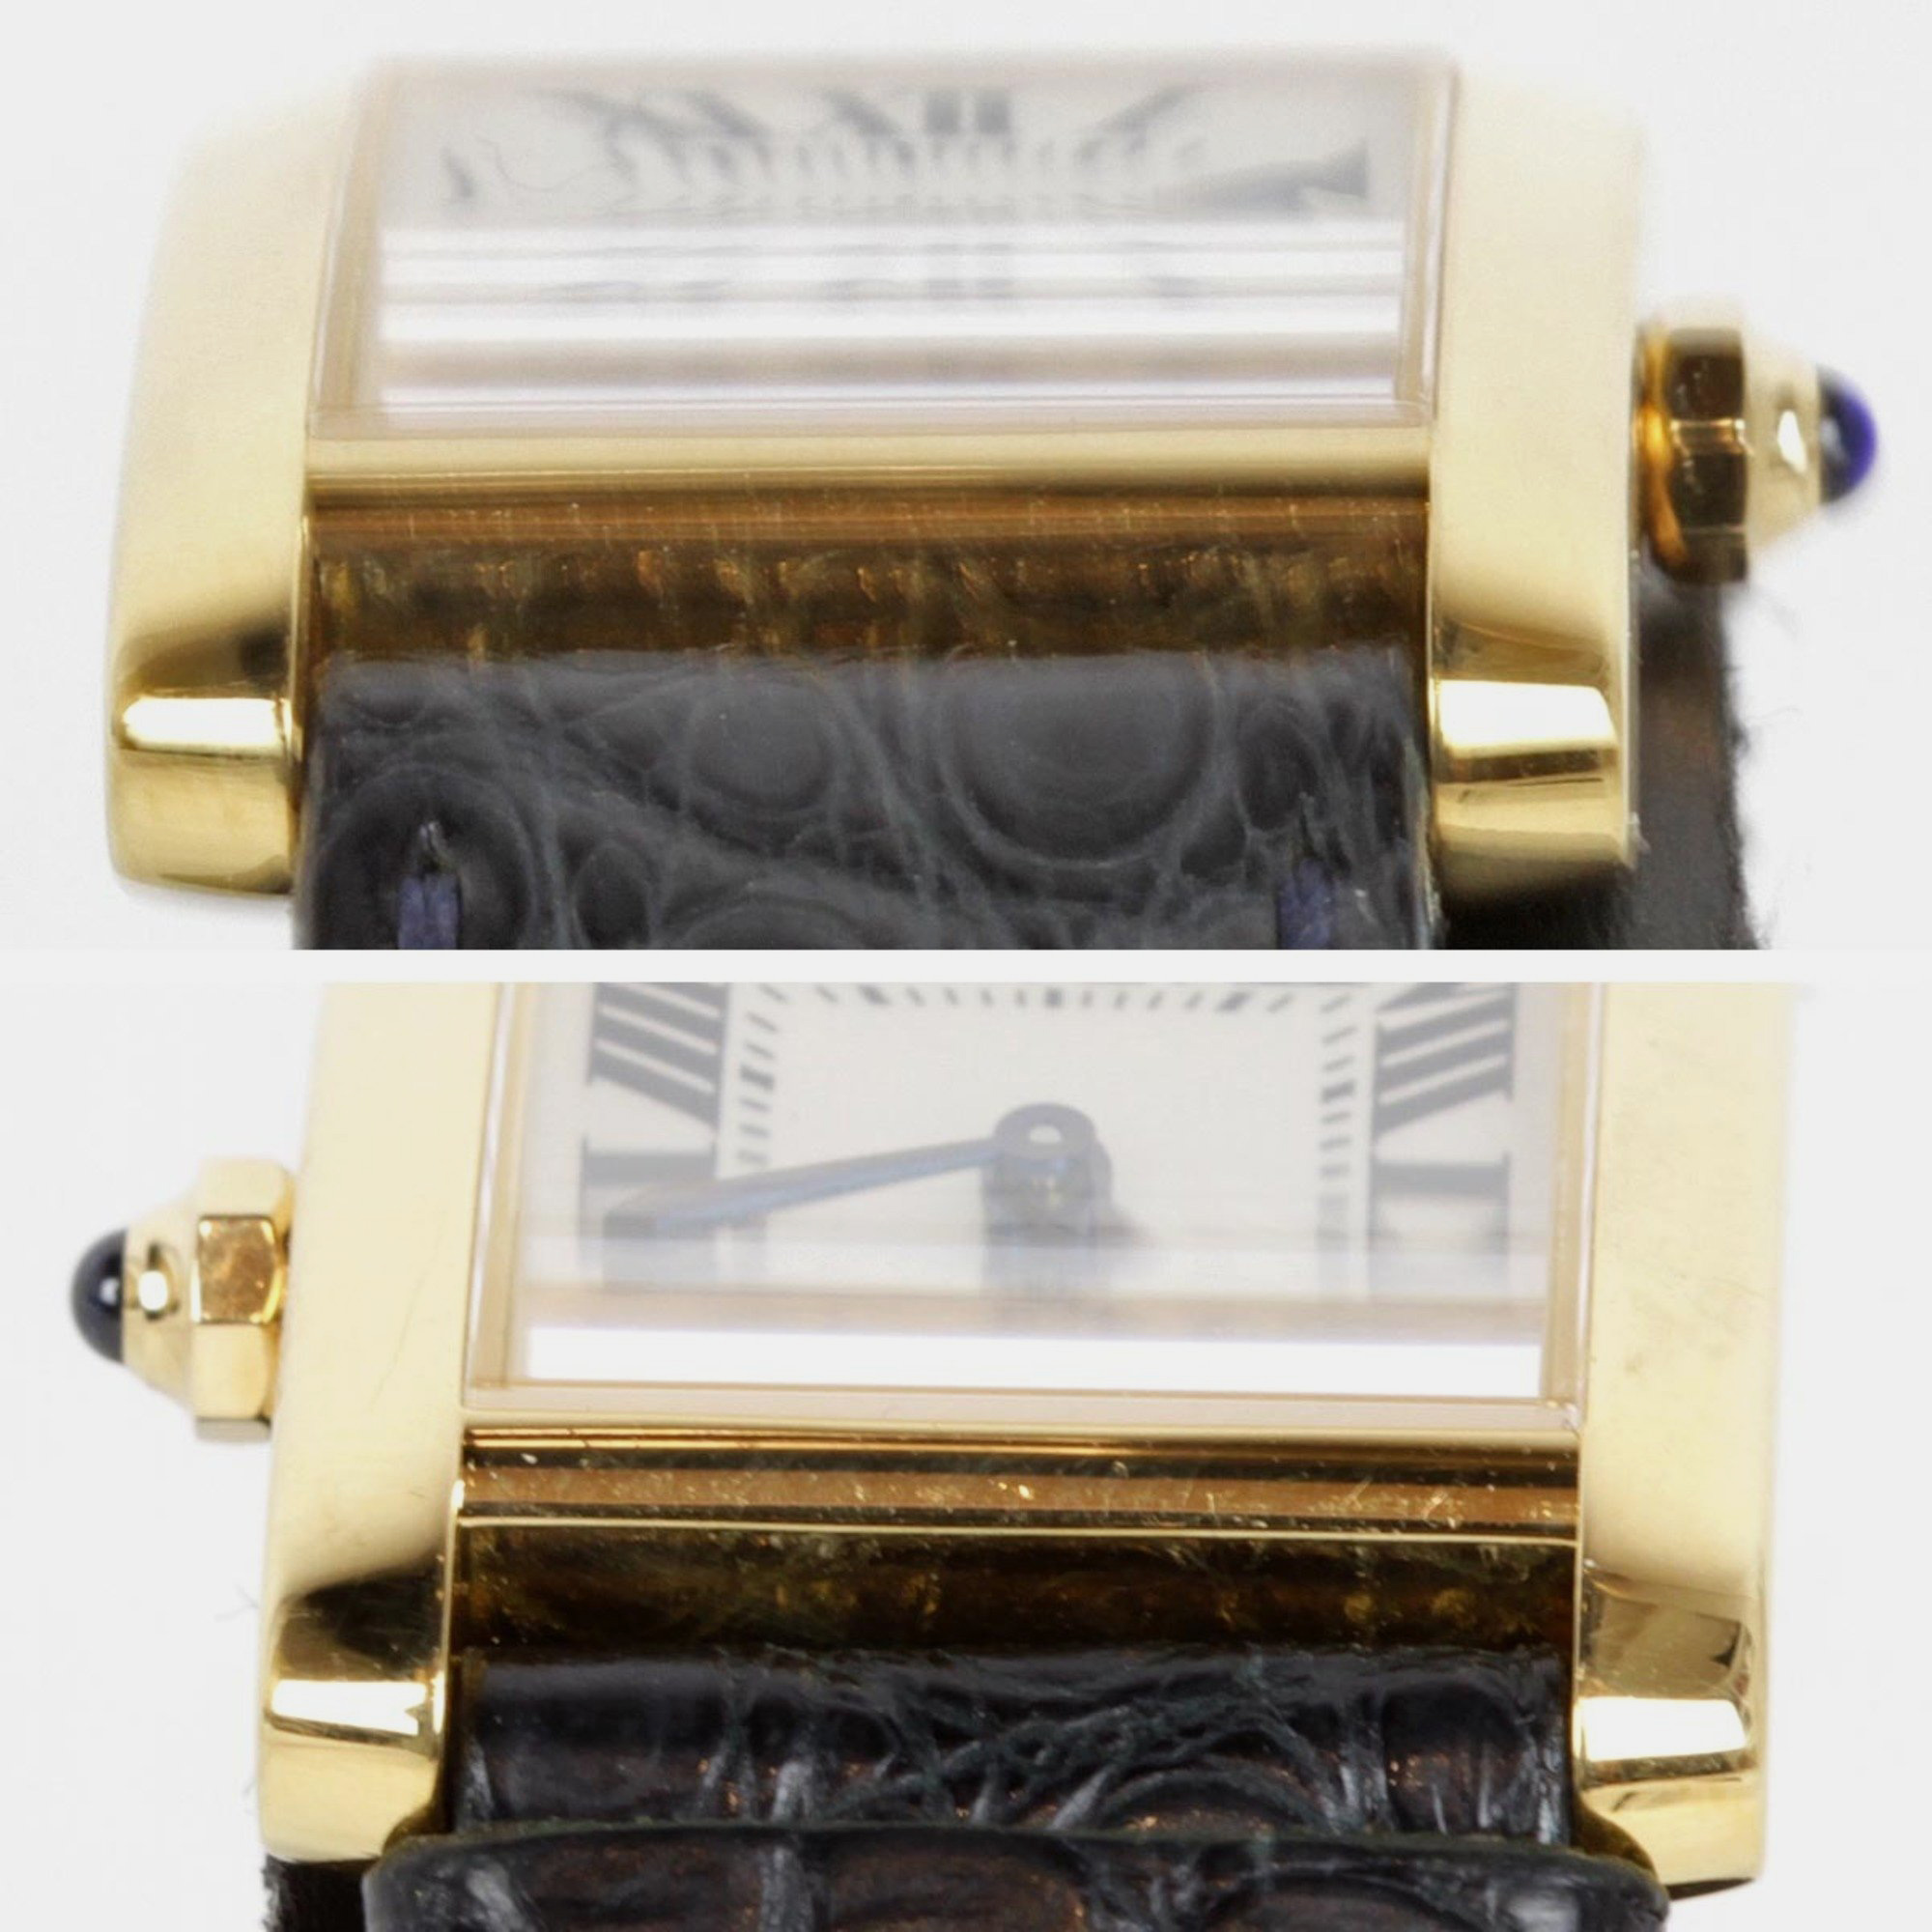 Cartier White 18k Yellow Gold Tank Francaise 2385 Quartz Women's Wristwatch 20 Mm